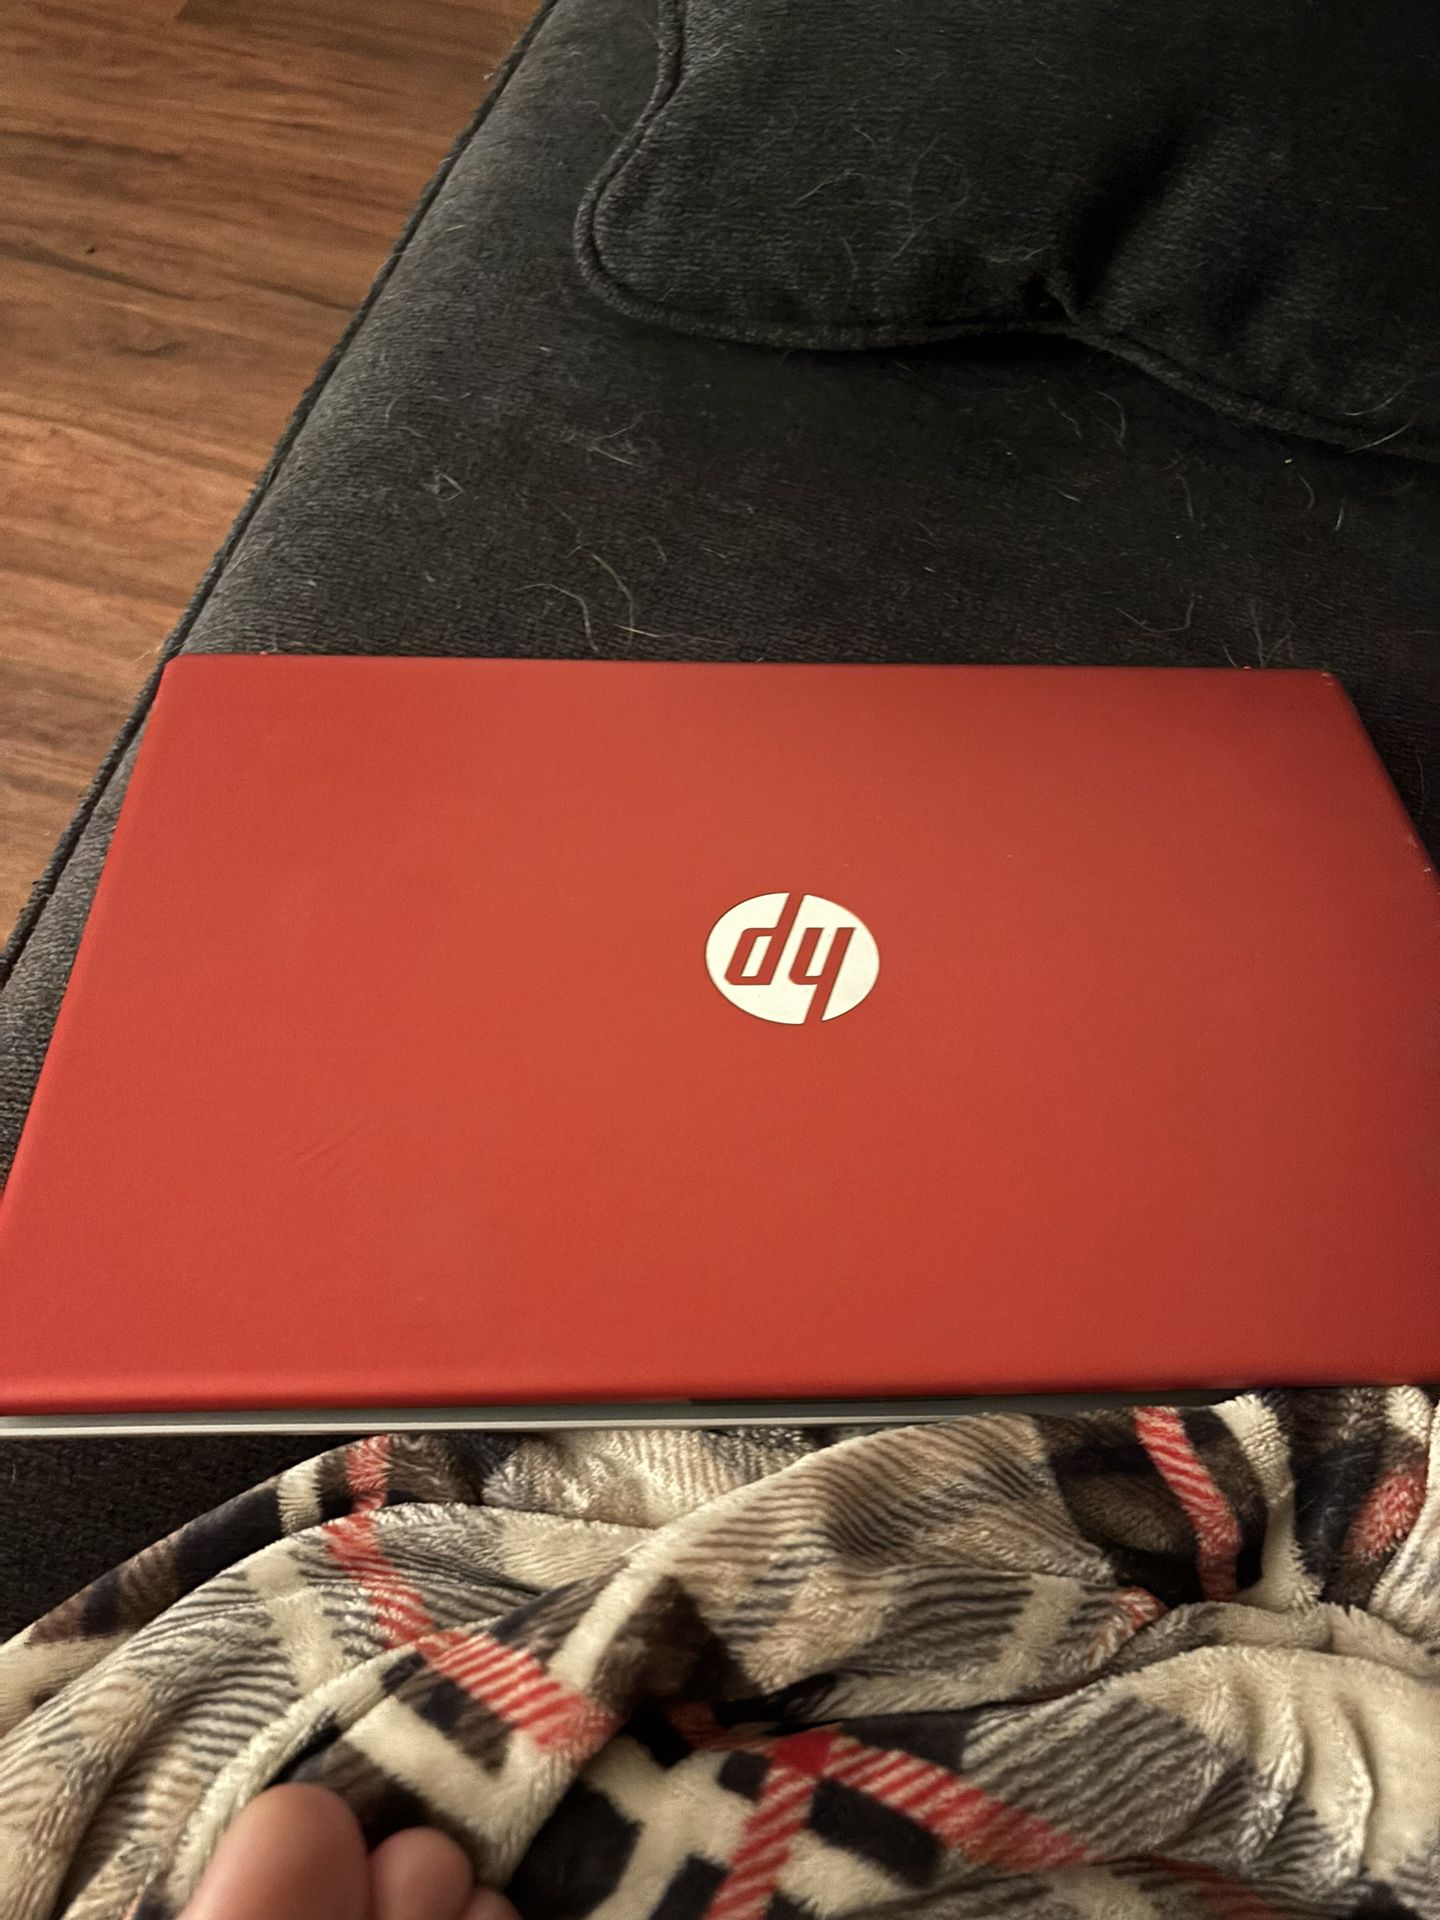 Hp 15.6 Laptop Red 